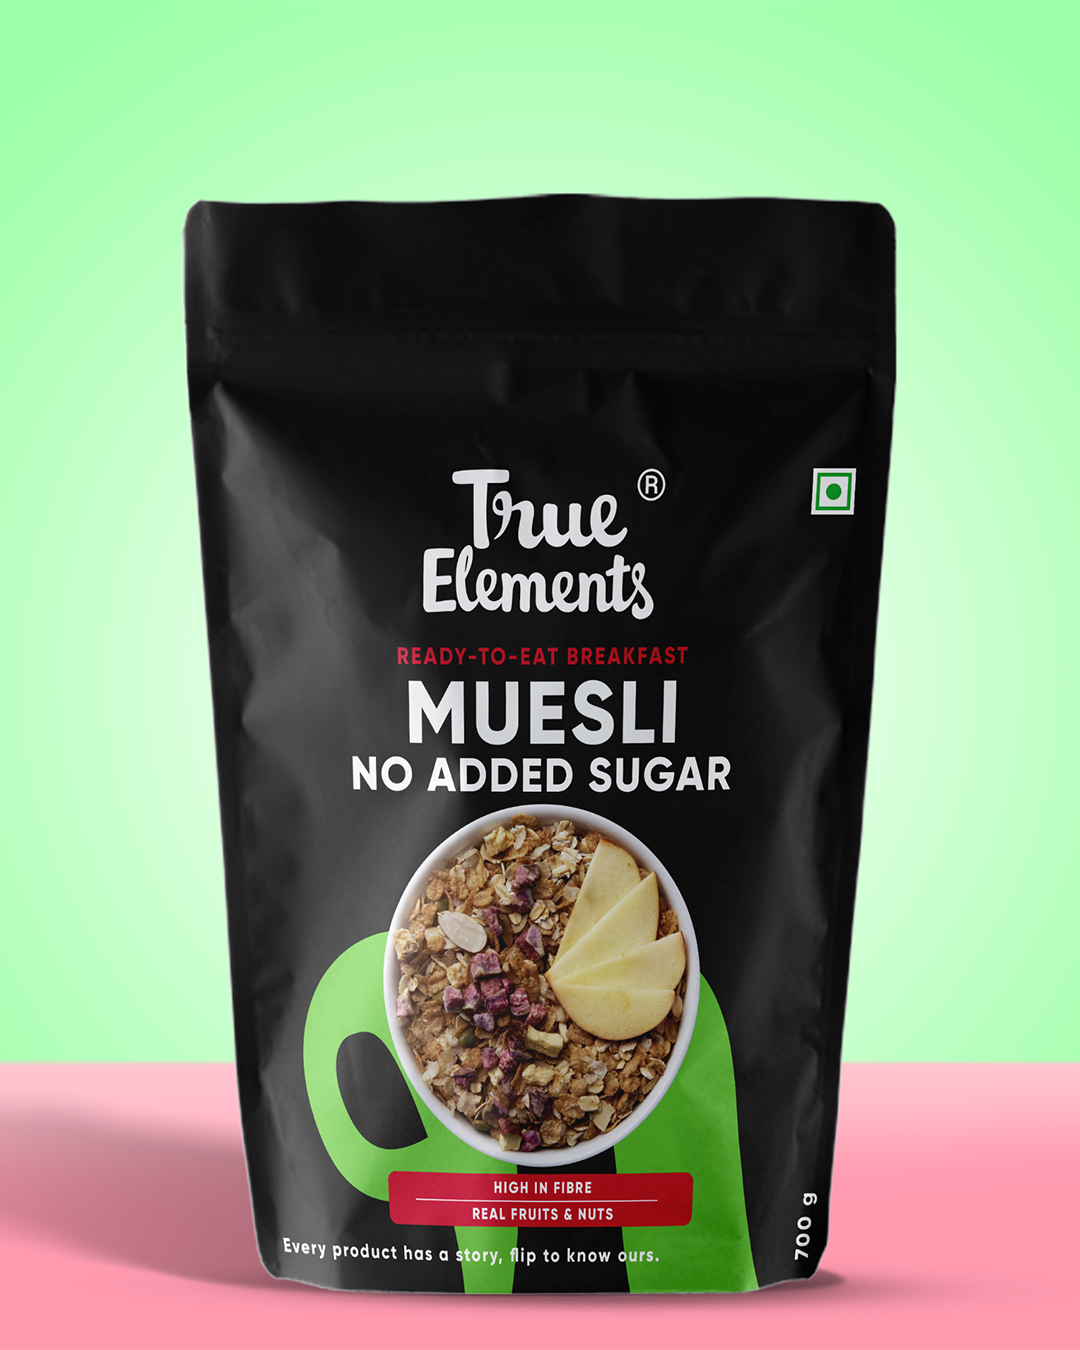 Organic muesli with no added sugar